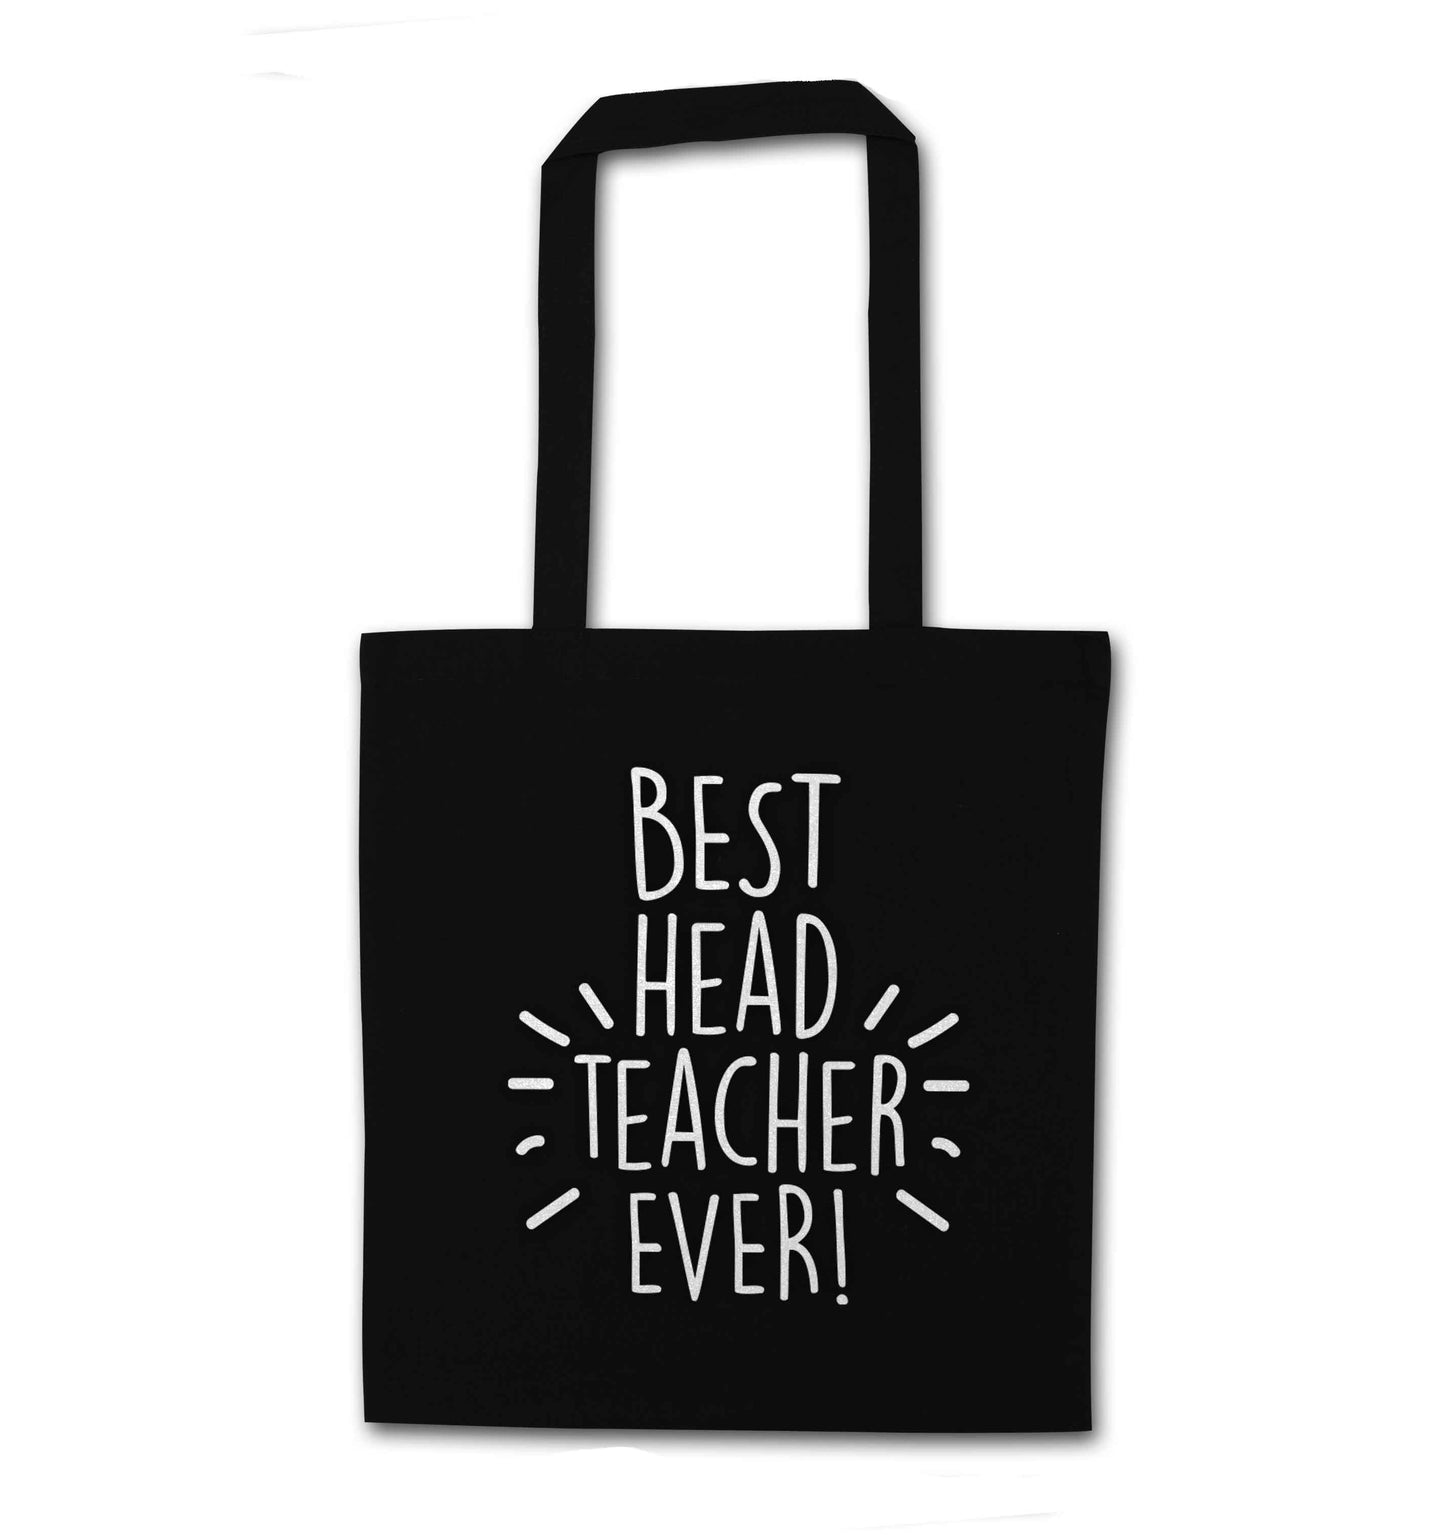 Best head teacher ever! black tote bag